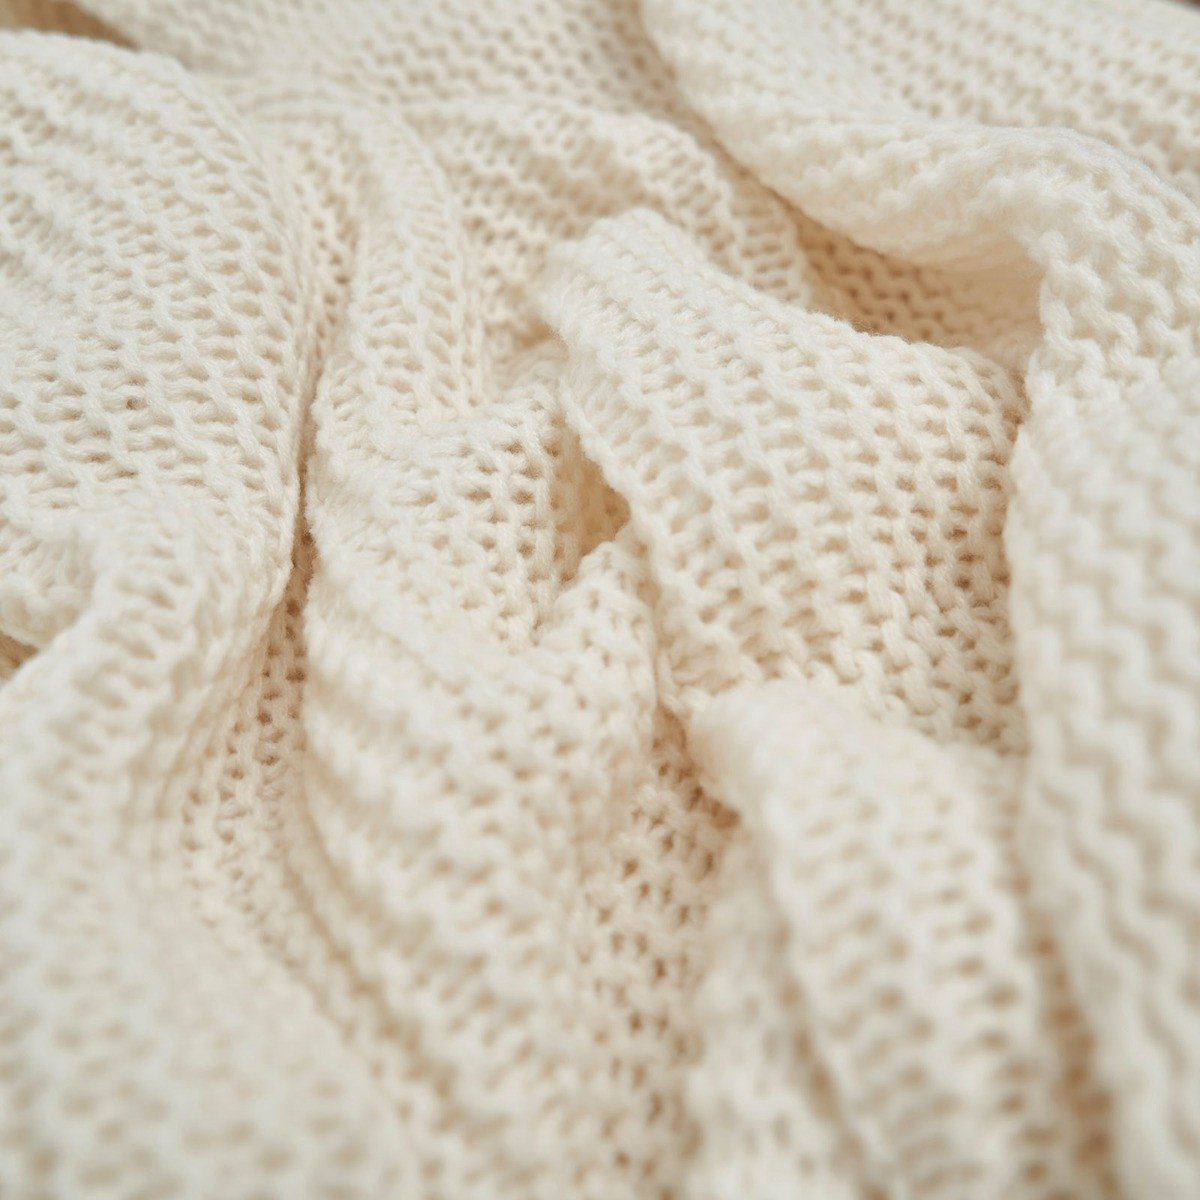 Dreamscene Chunky Knit Pom Pom Throw, Cream - 150 x 180cm>